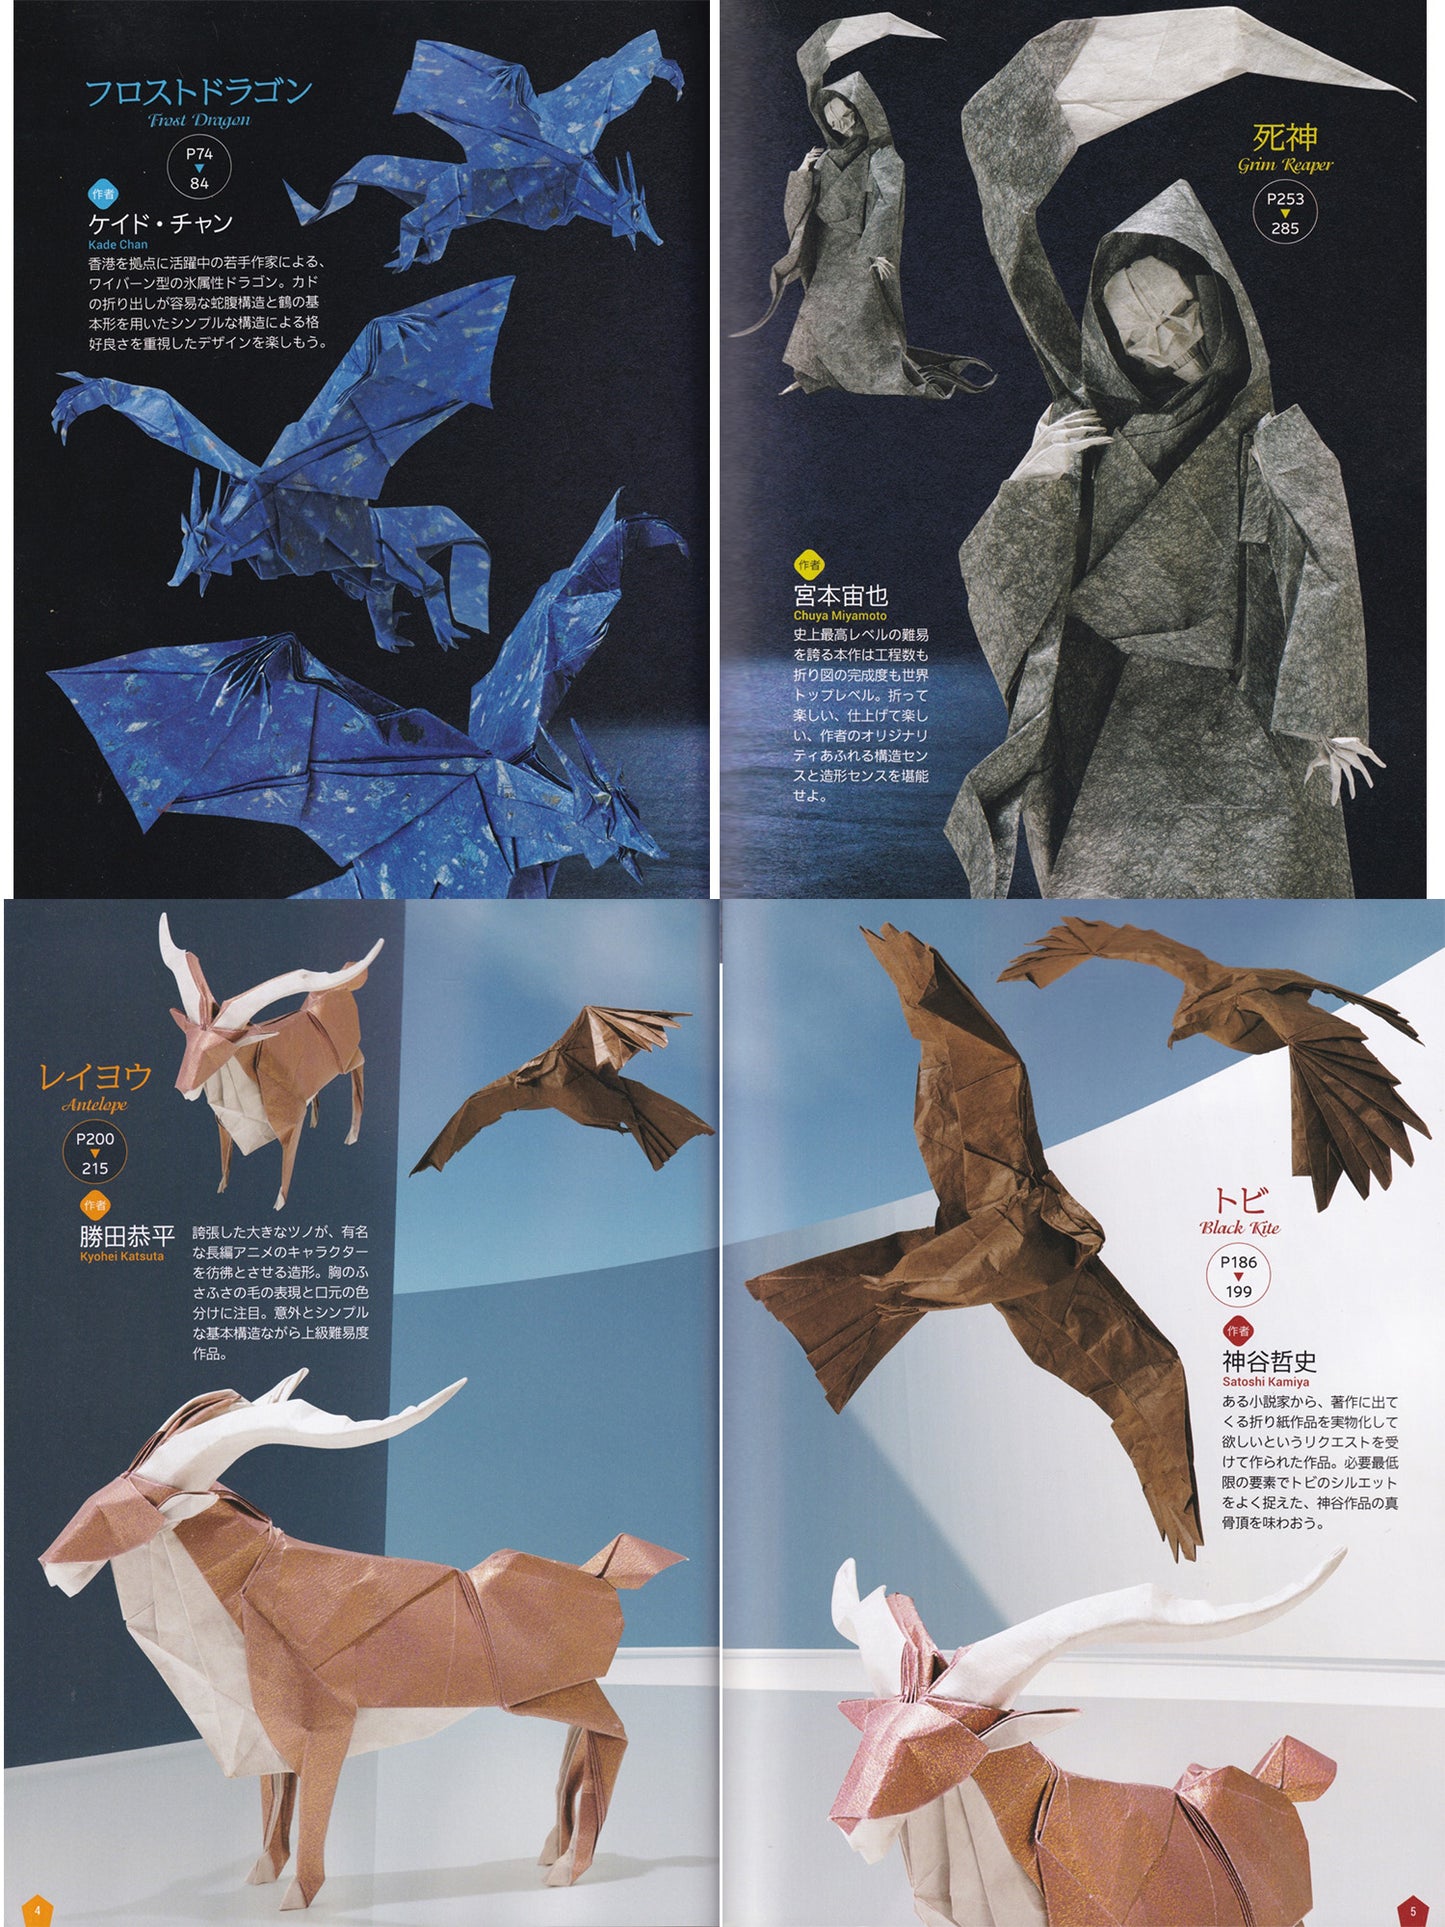 new generation of origami 究极折纸 新世代